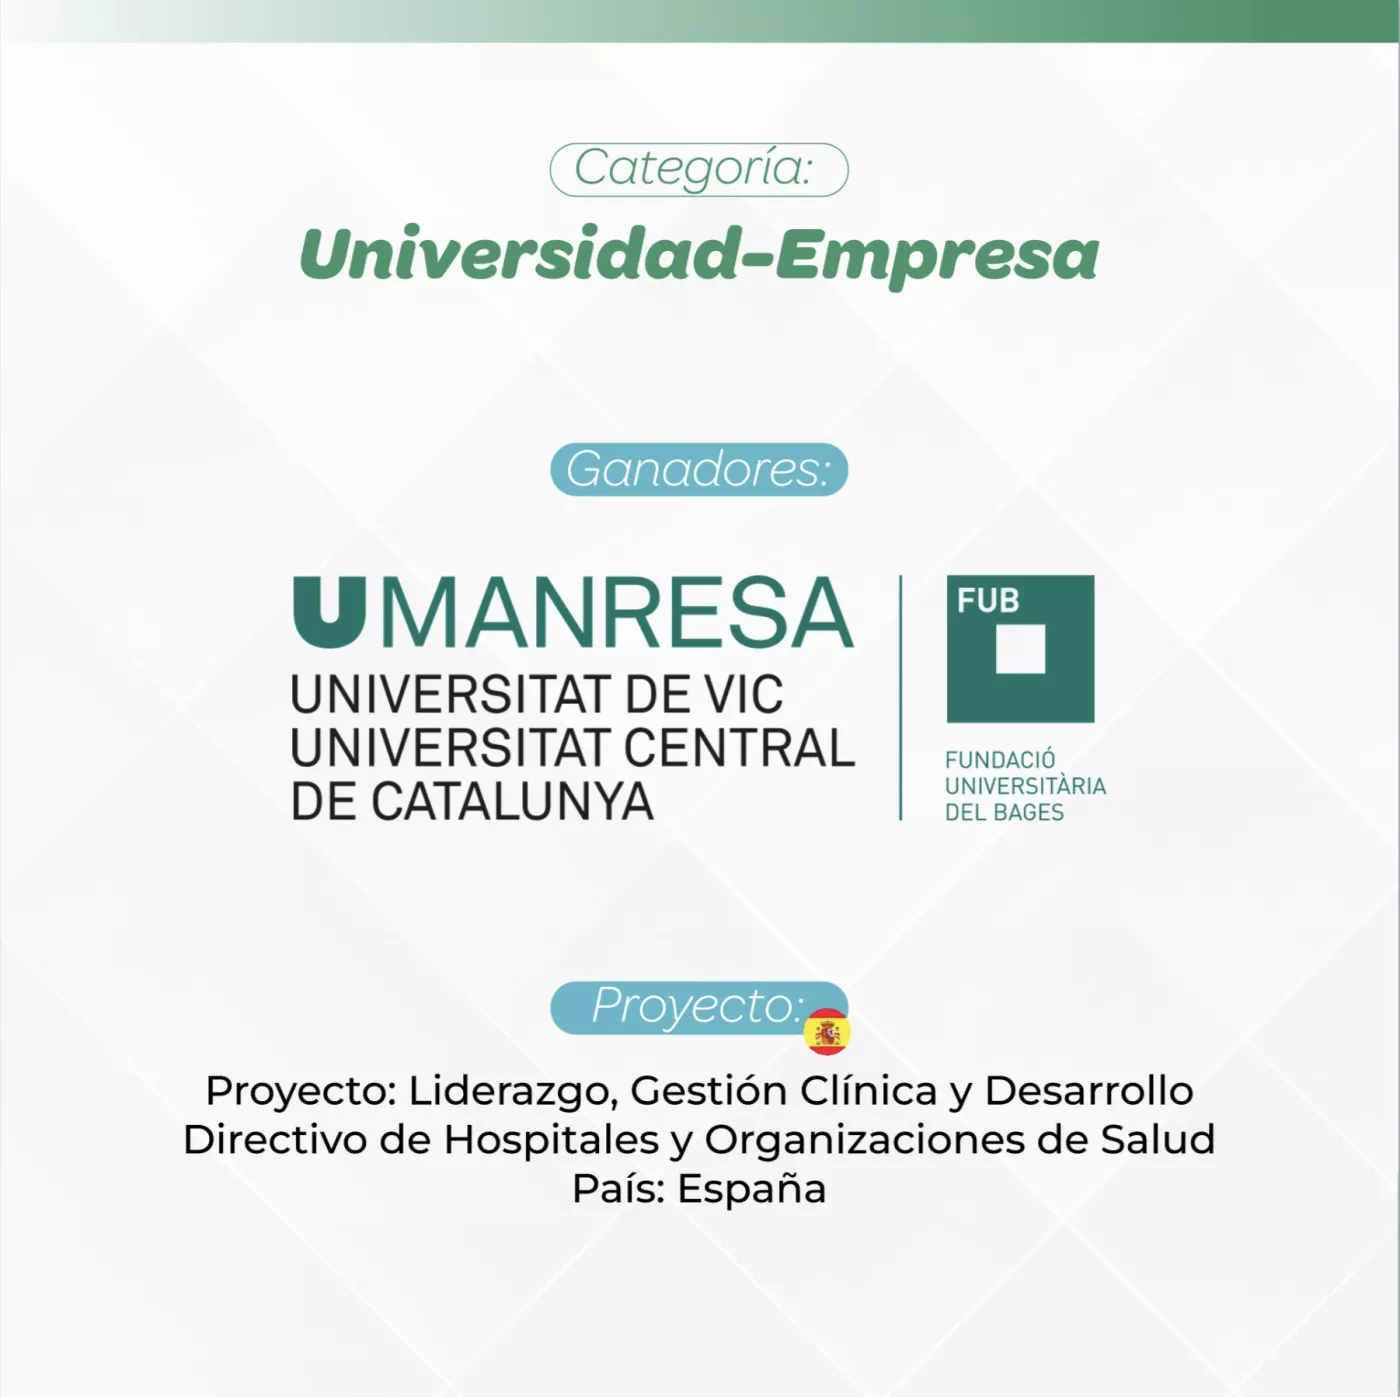 UManresa i UCF reben el premi Universitat - Empresa de RECLA (Red de Educación Continua de Latinoamerica y Europa) captura